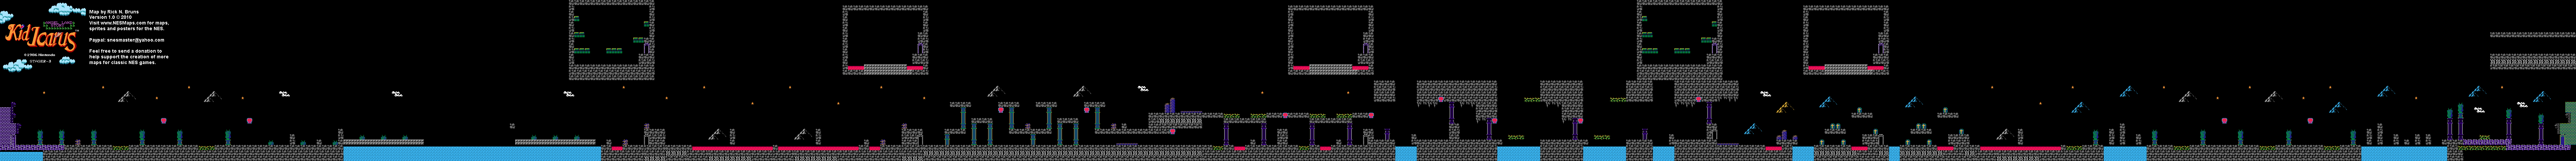 Kid Icarus - Stage 2-3 - NES Map BG